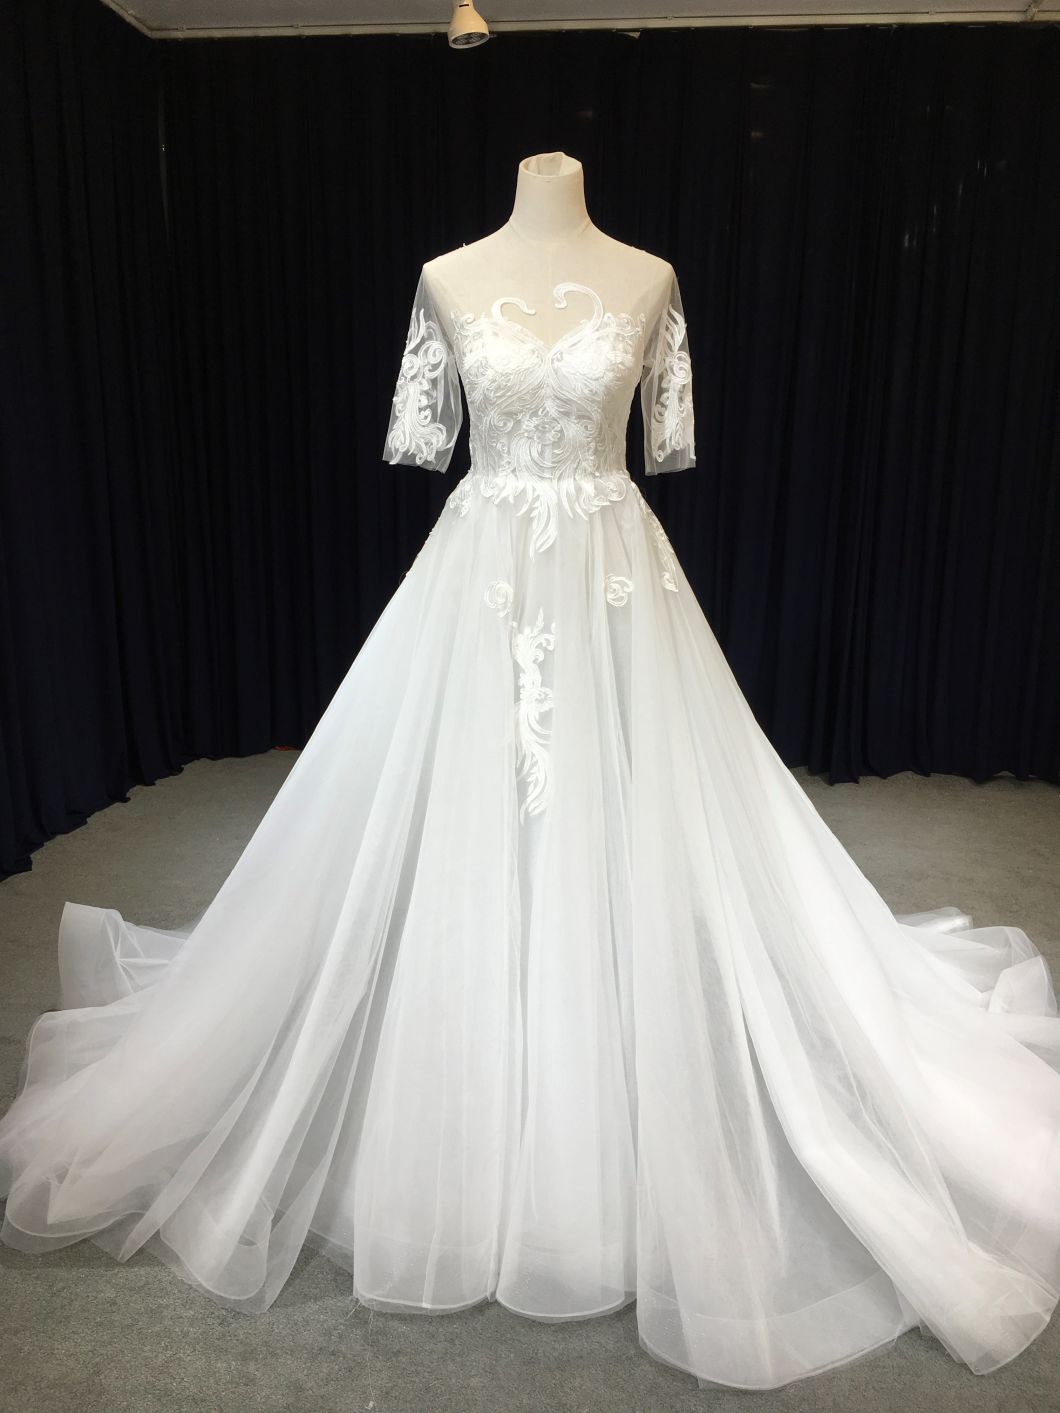 Aoliweiya New Arrival Love Swan Lace Wedding Dress